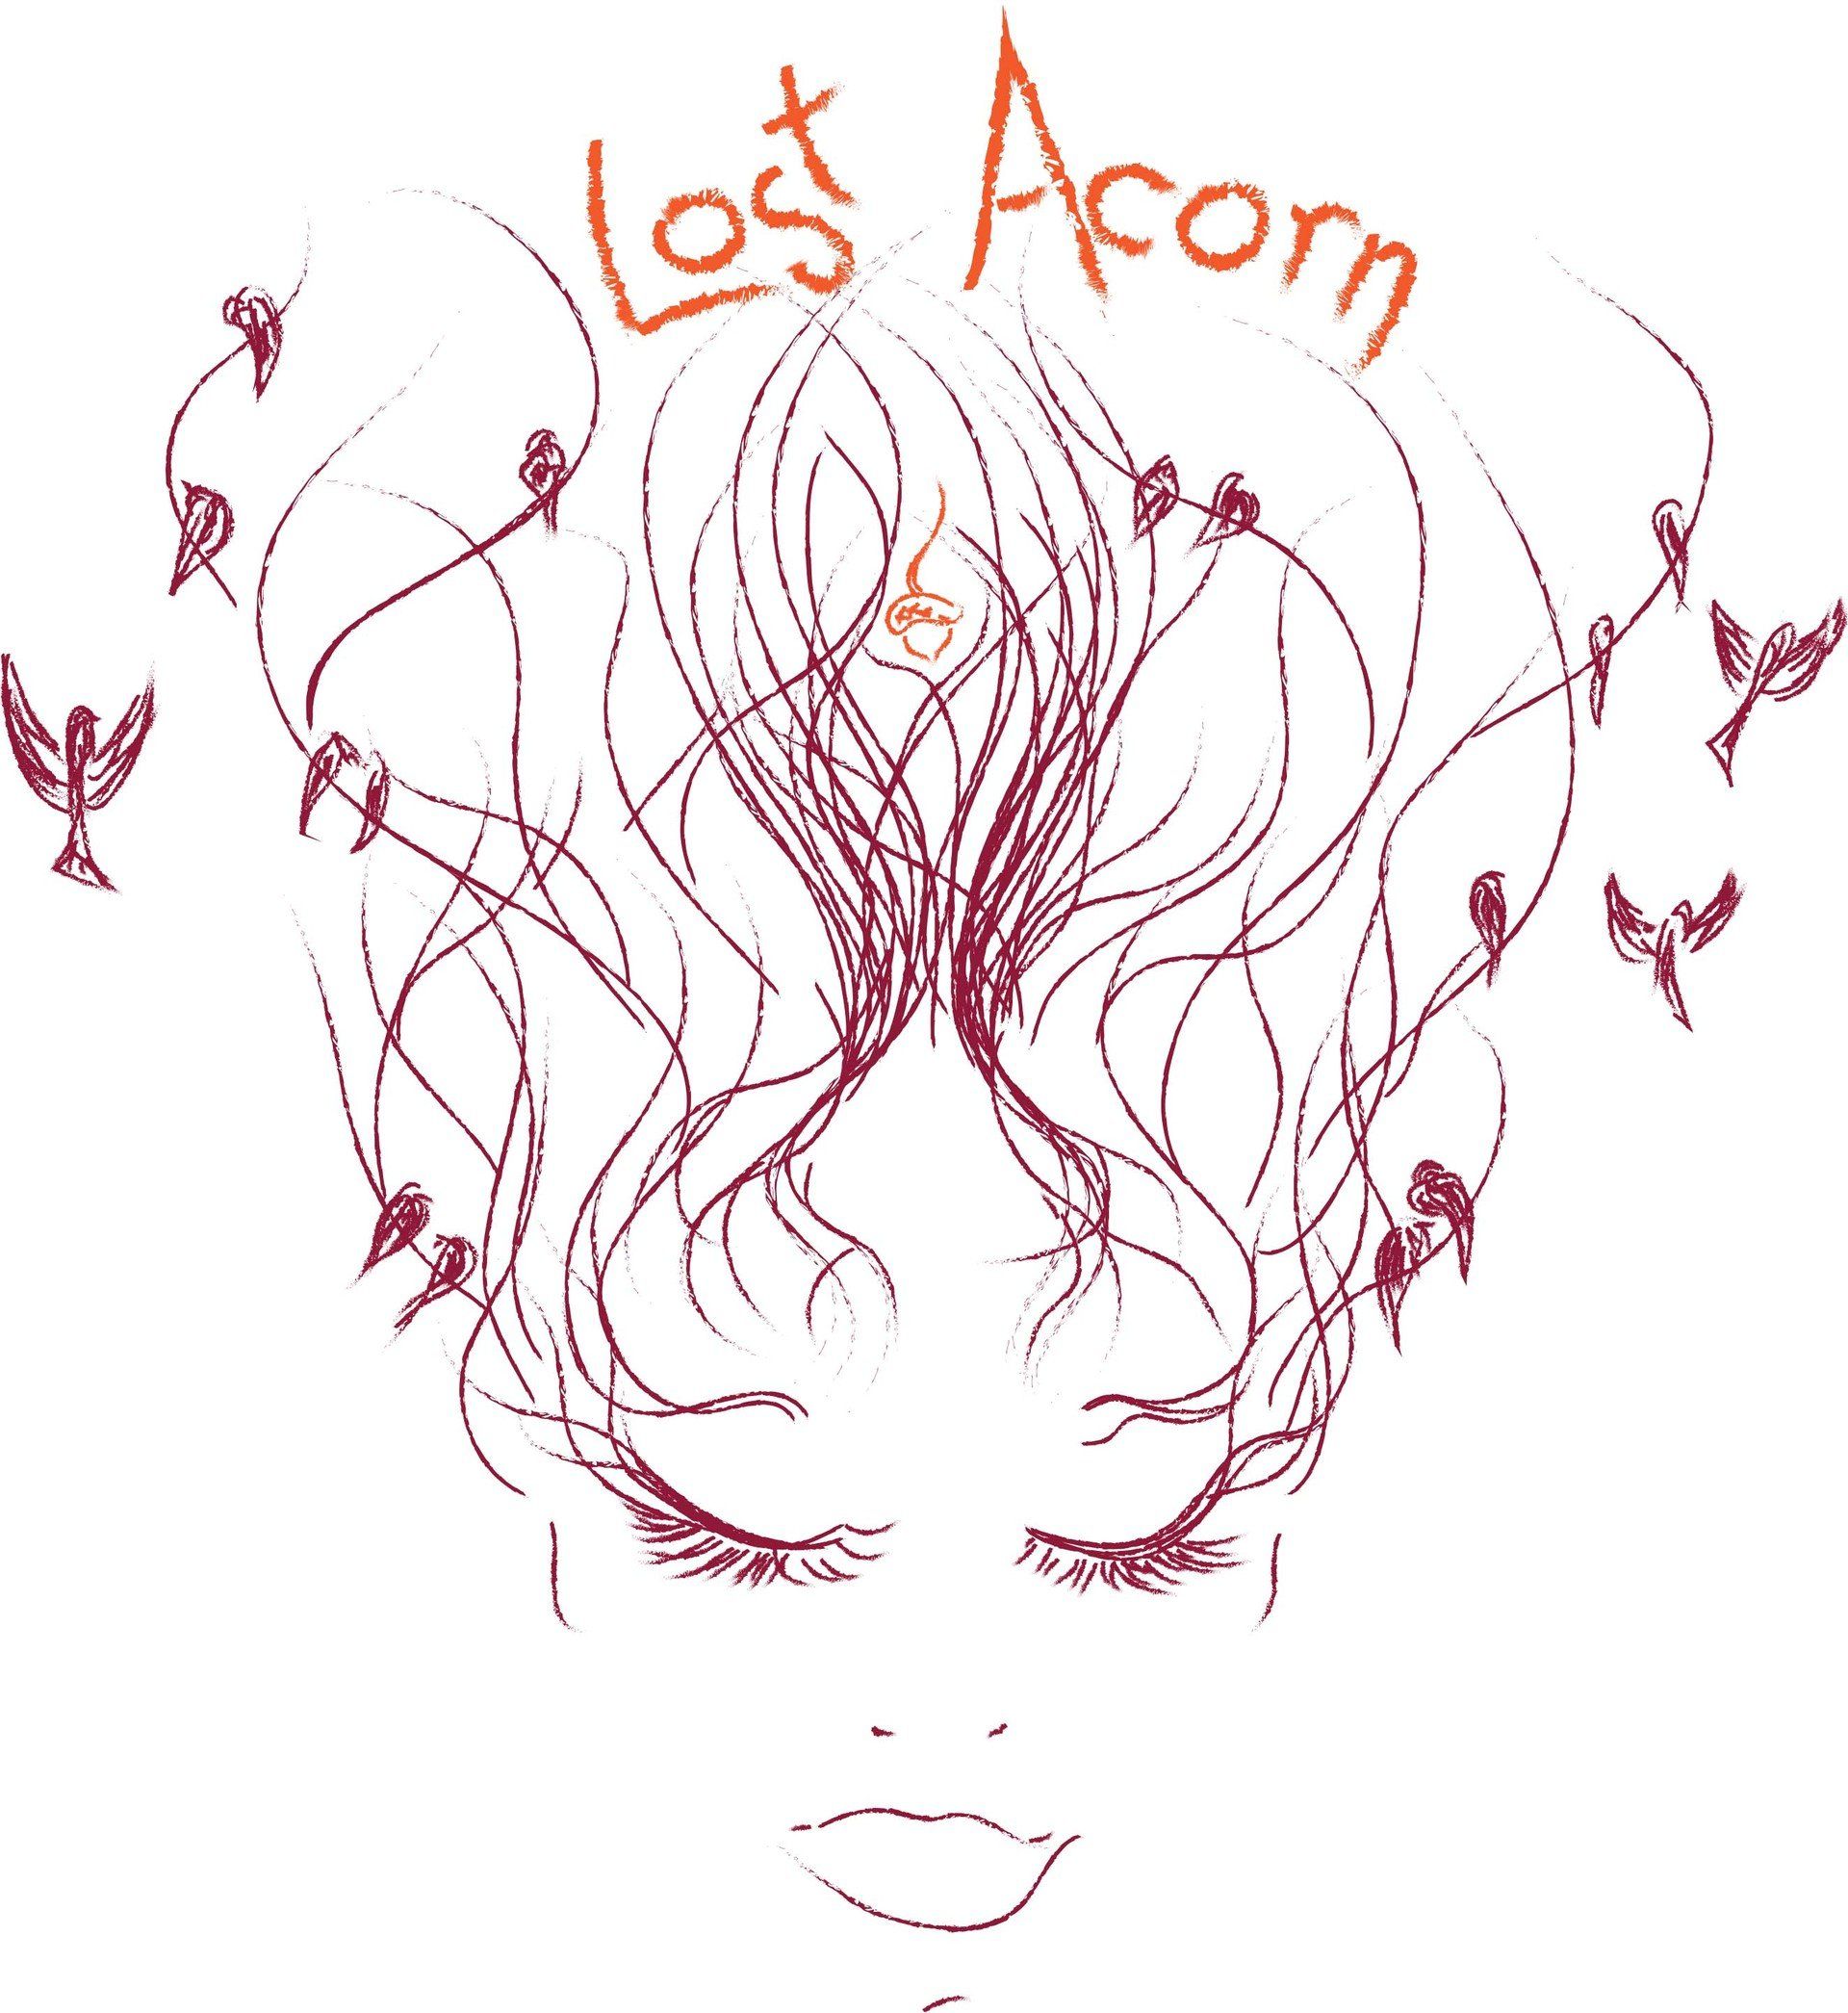 Lost Acorn Logo